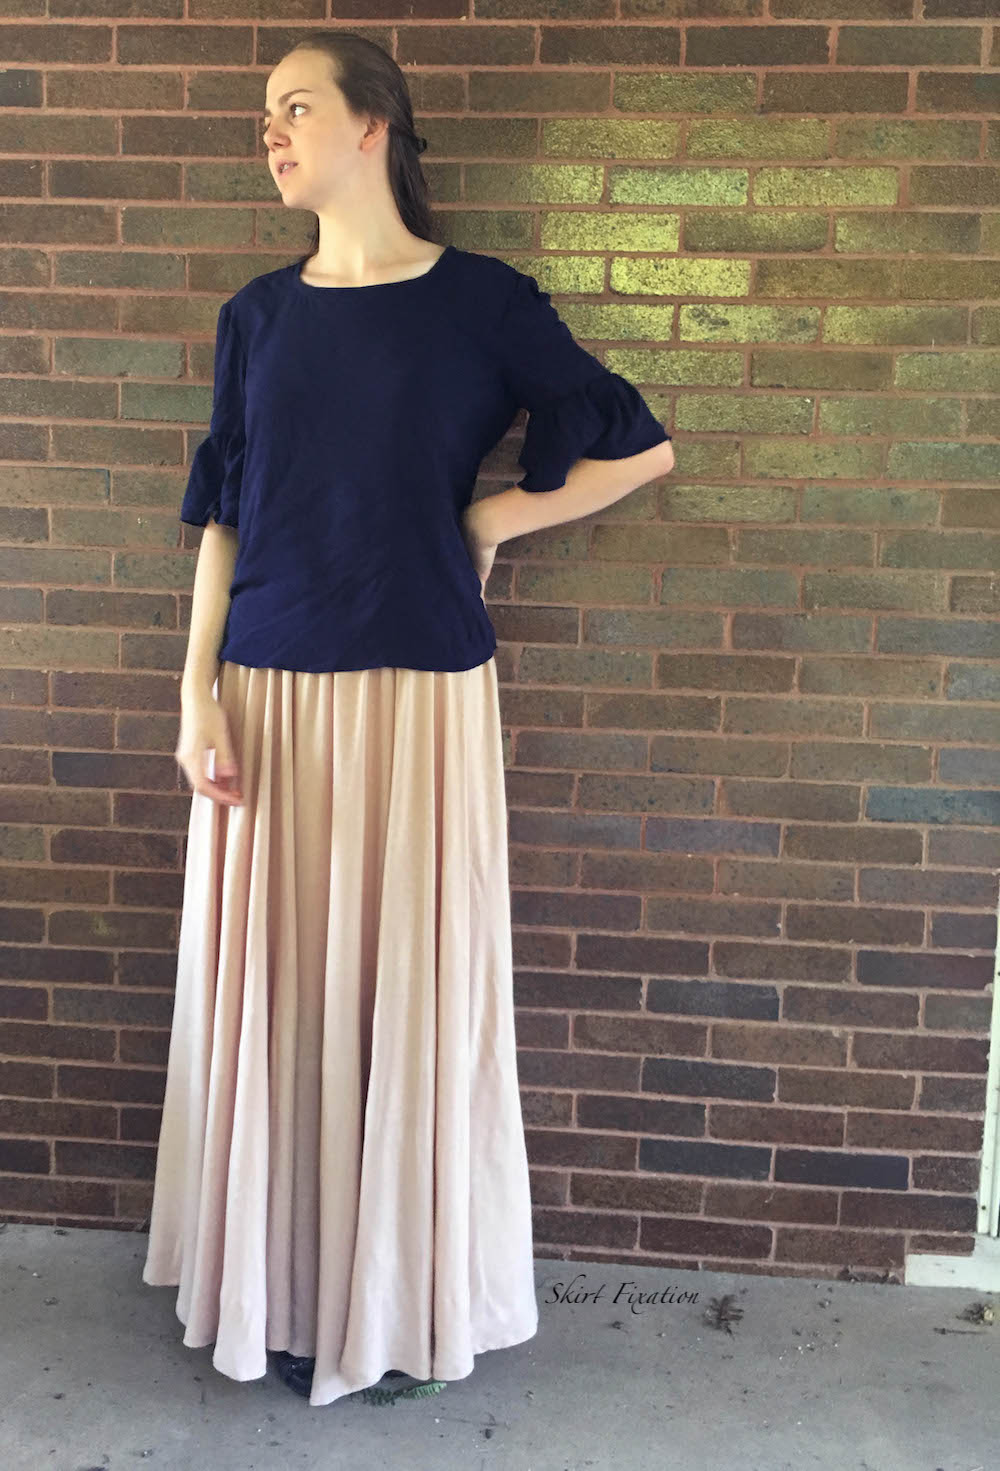 Maxi circle skirt tutorial from Skirt Fixation